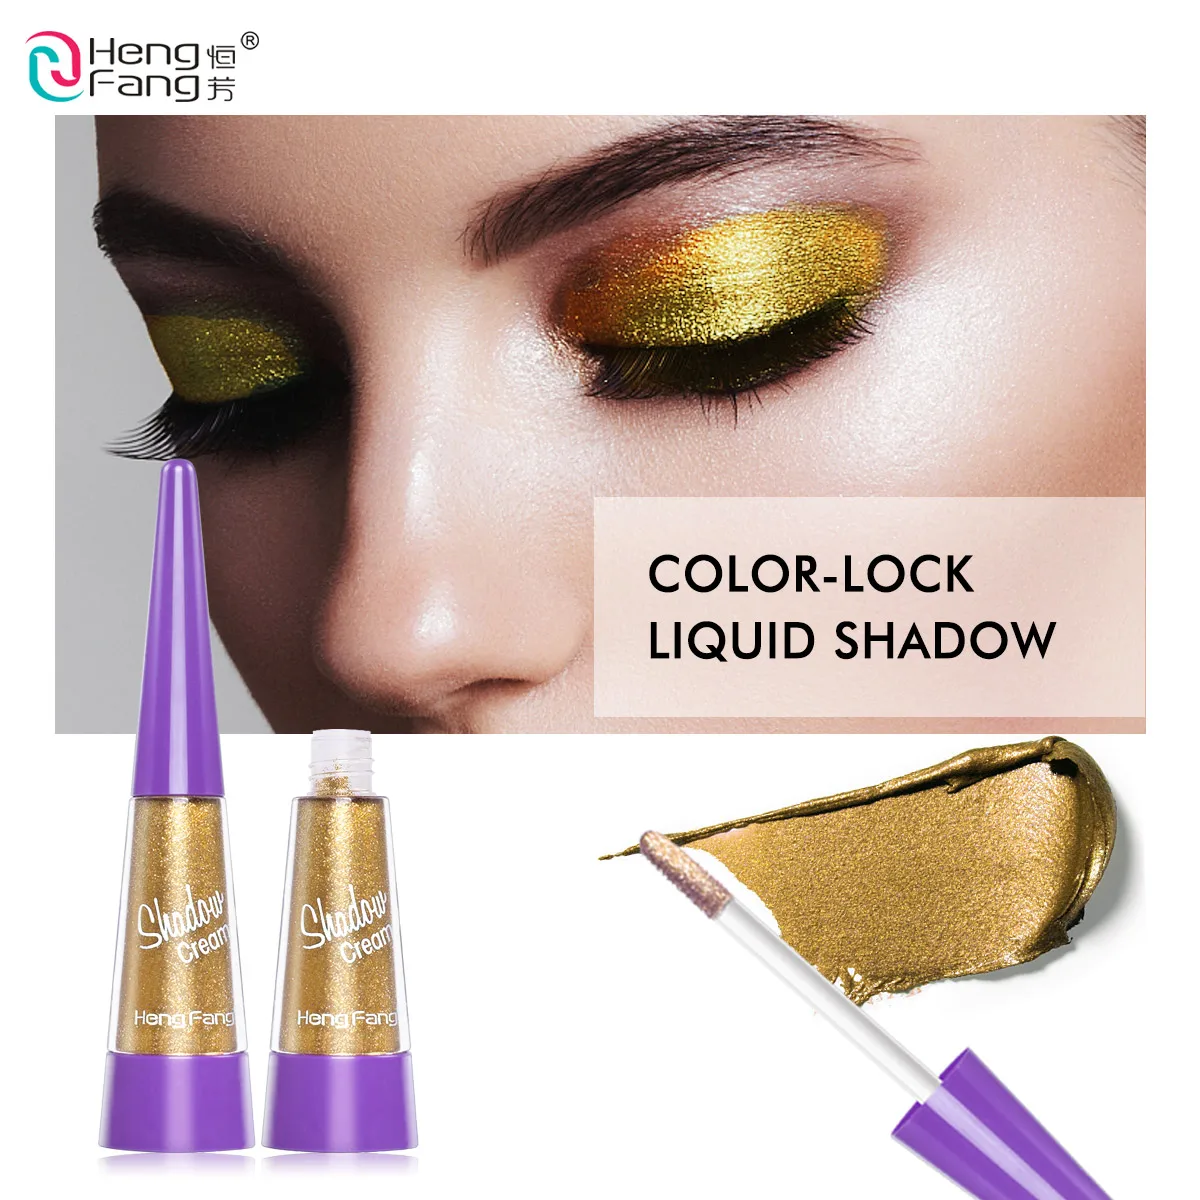 

Diamond Bead Shining Eye shadow Liquid 12 Colors Waterproof Eyeshadow 6.9g Beauty Eyes Makeup Brand HengFang #H6537